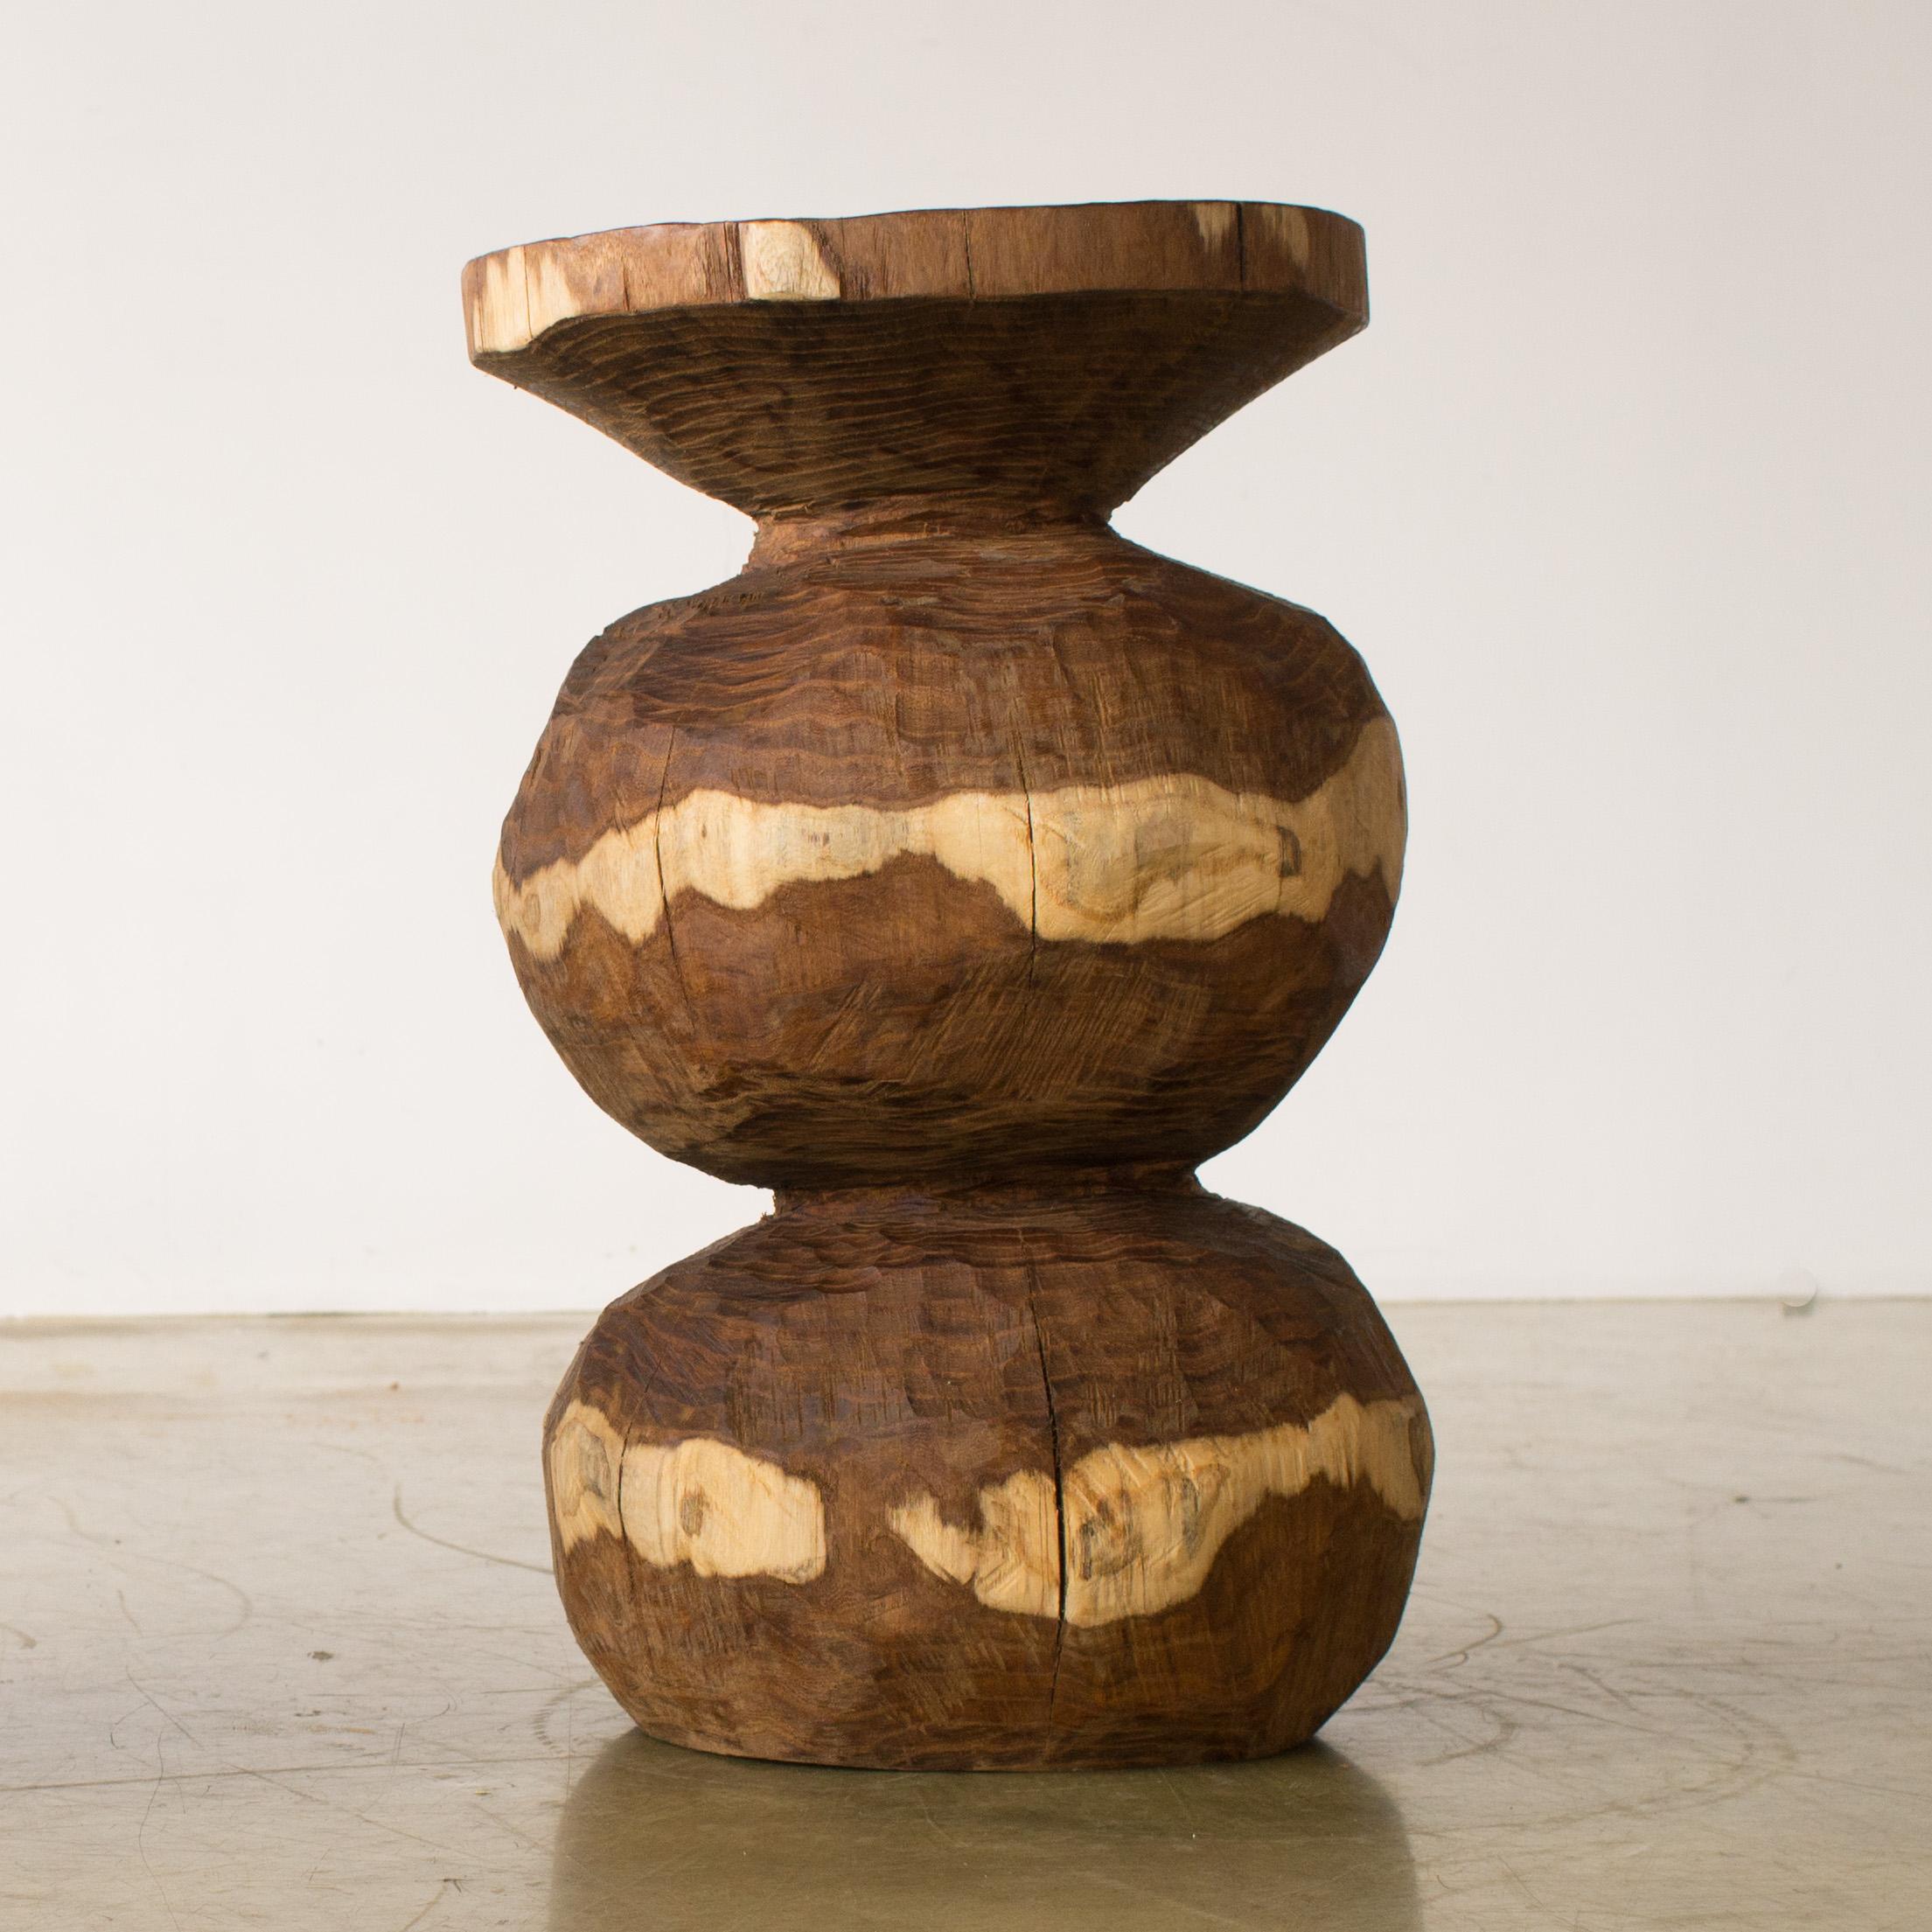 Hand-Carved Hiroyuki Nishimura Furniture Sculptural Wood Stool10-08 Tribal Glamping